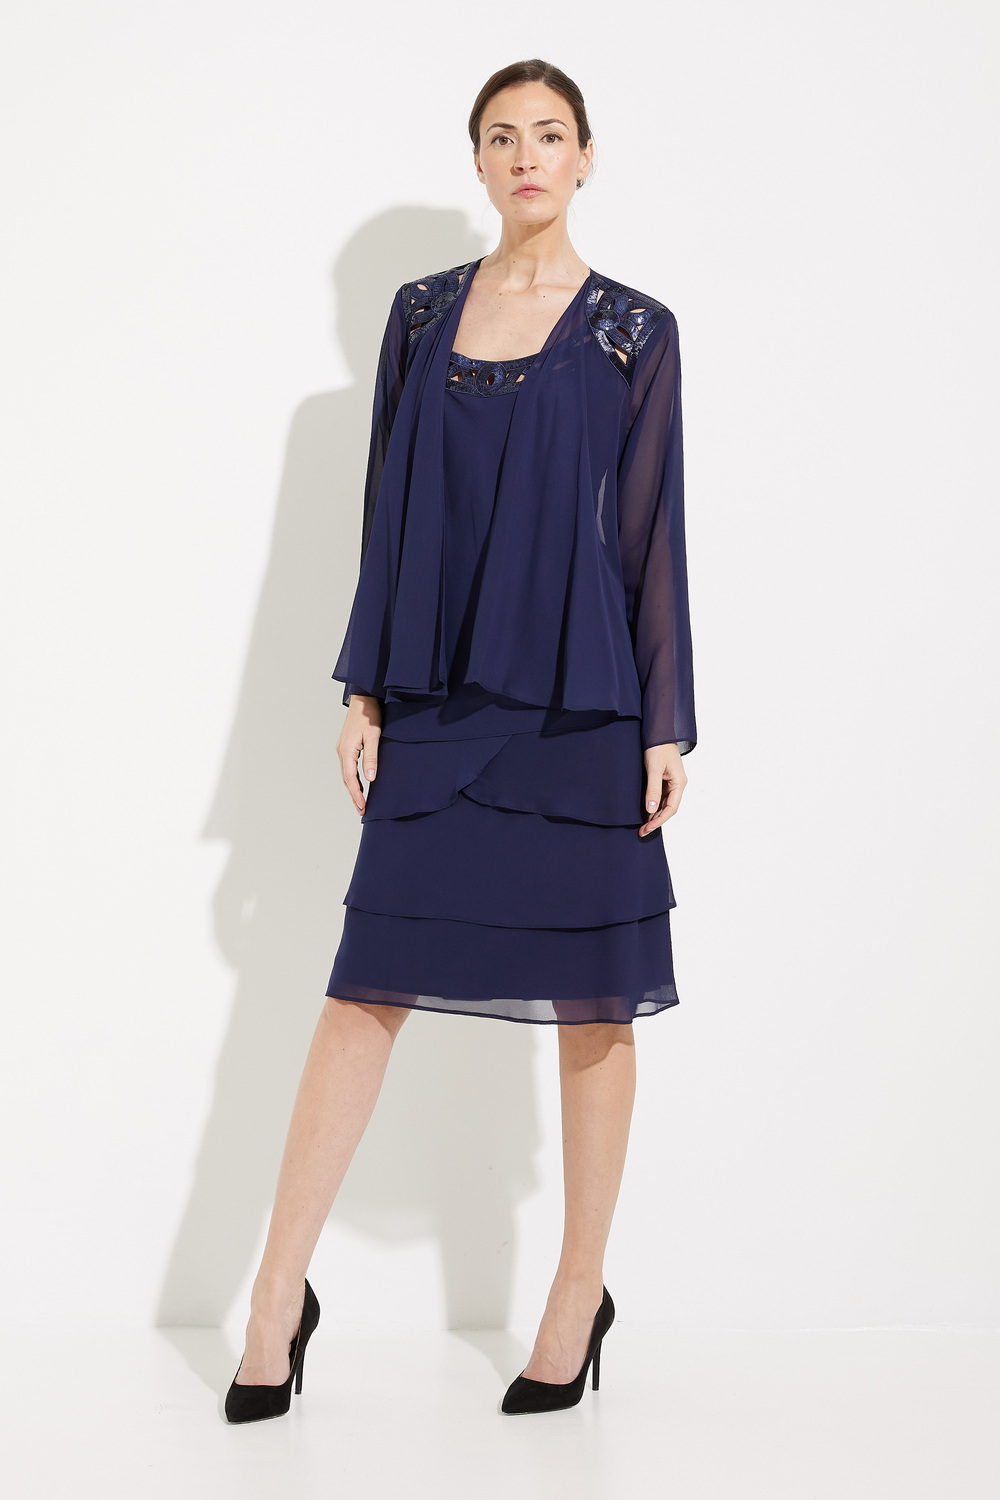 Sequin Appliqué Dress with Jacket Style 11069 . Saphire